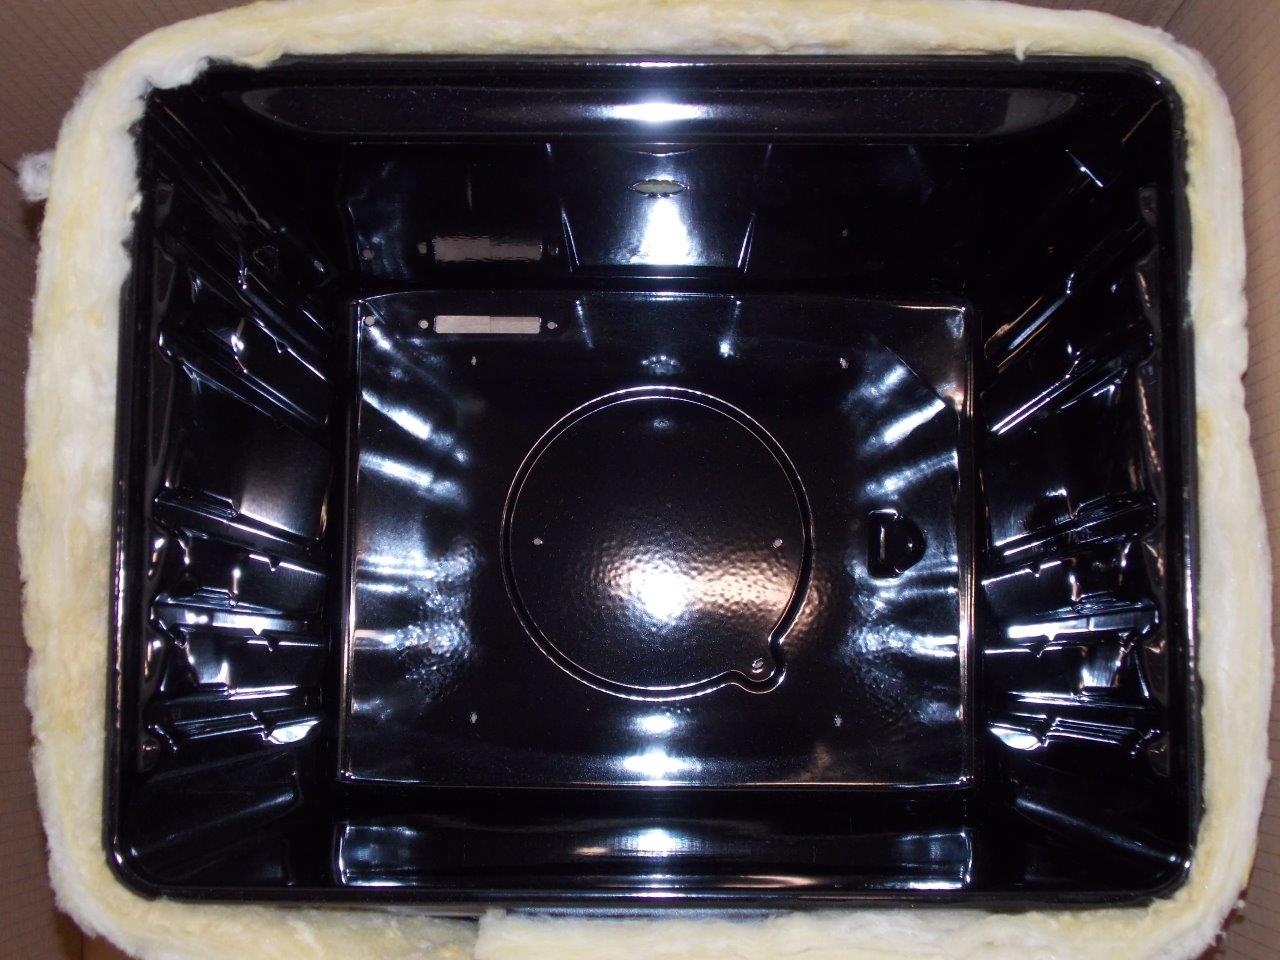 Oven chamber unit.1*1.3 Hansa BOEI62030030 - широкий ассортимент фото1